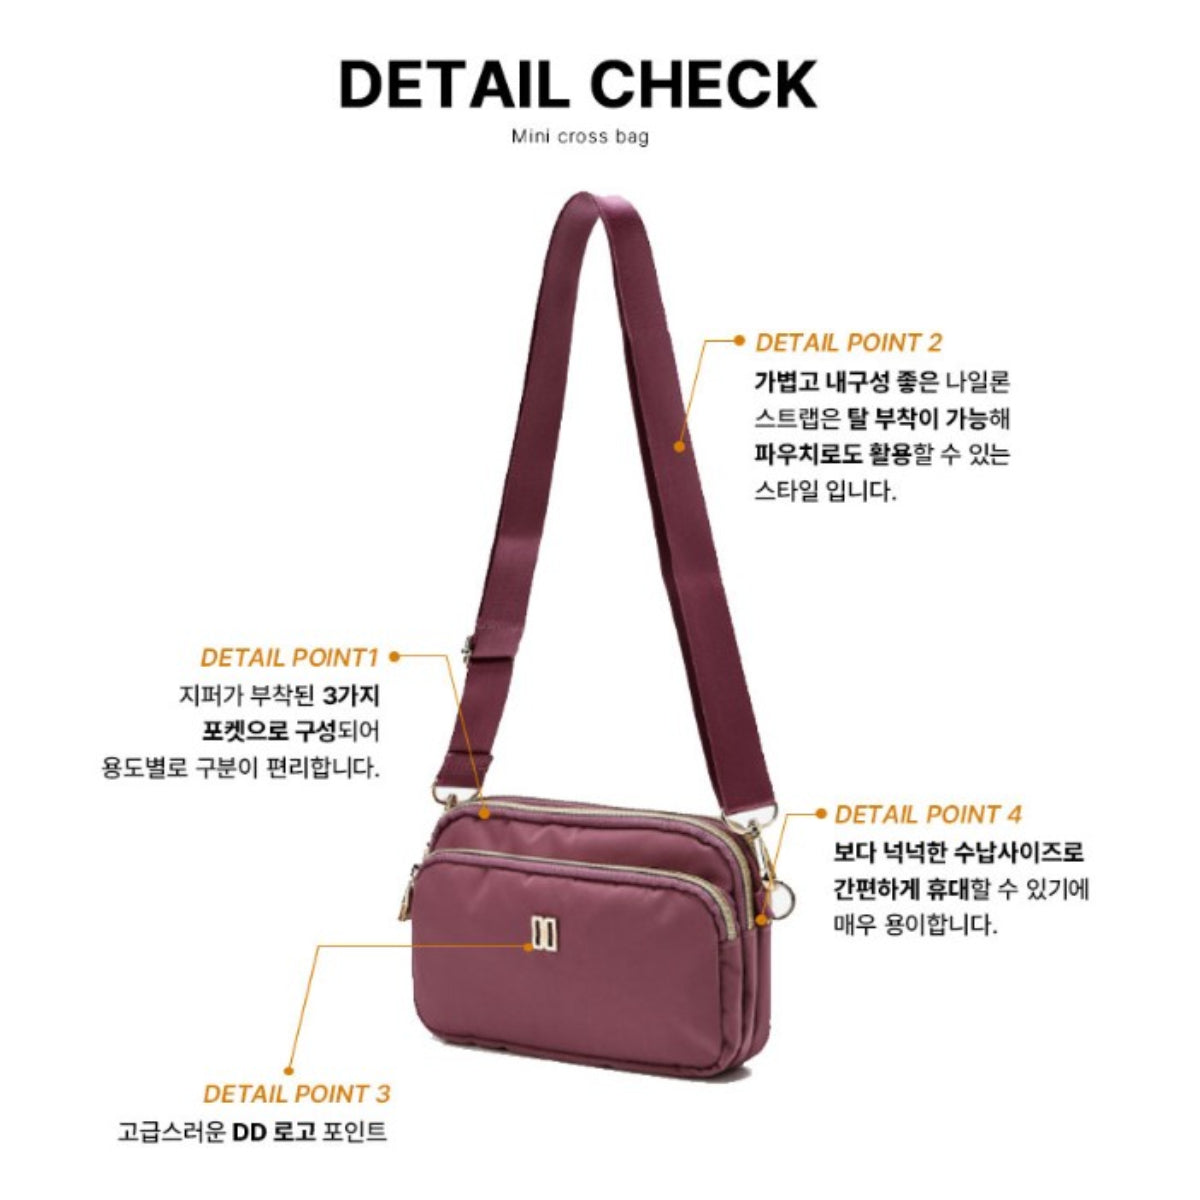 DAKS Ultralight Mini Cross Bag Pink Easy to Carry Large Storage Space / from Seoul, Korea